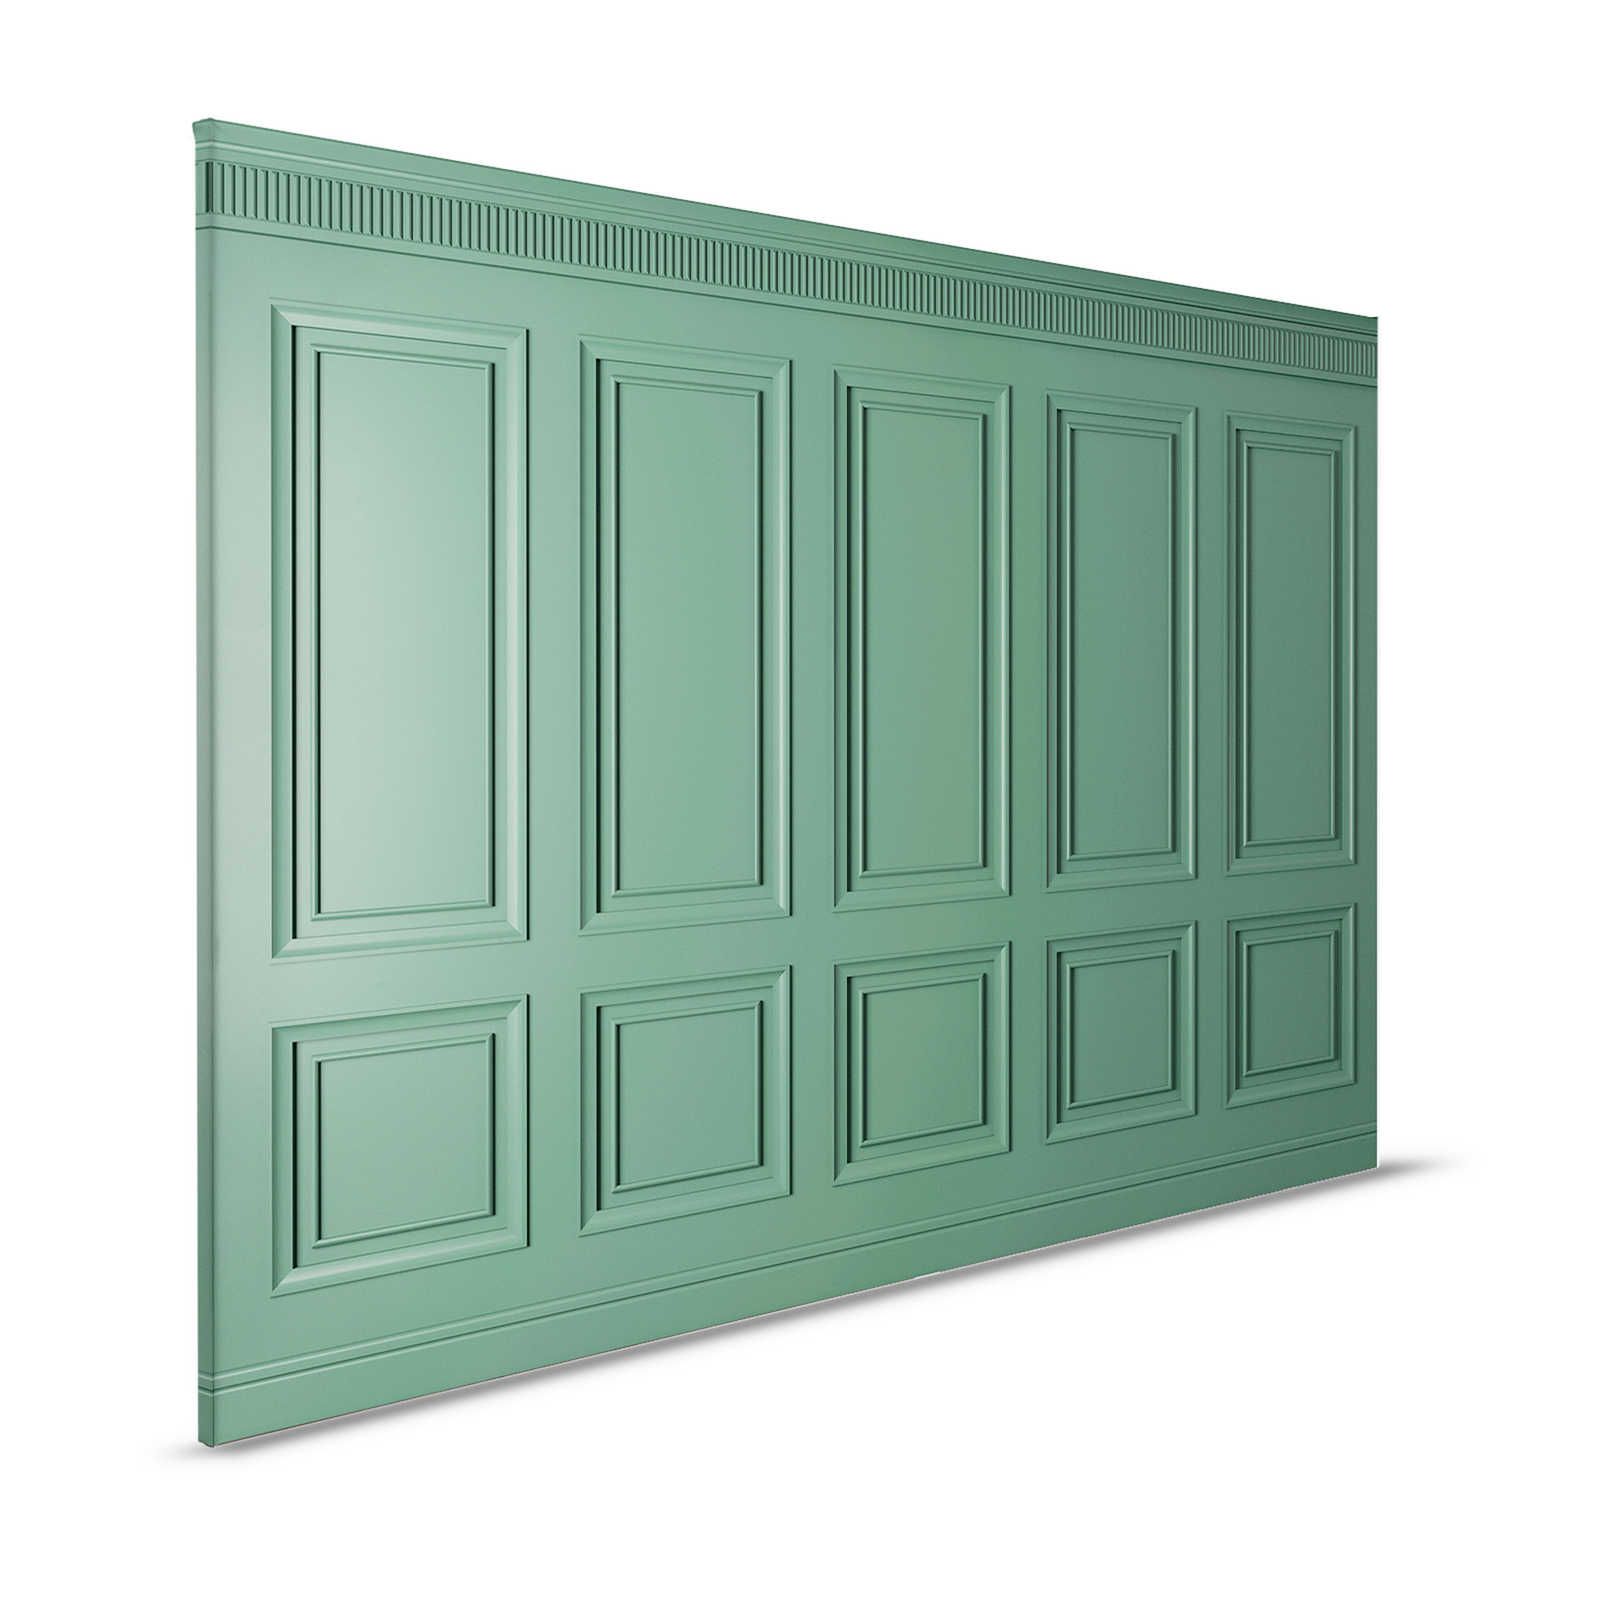 Kensington 1 - 3D Canvas painting wood panelling fir green - 1.20 m x 0.80 m
